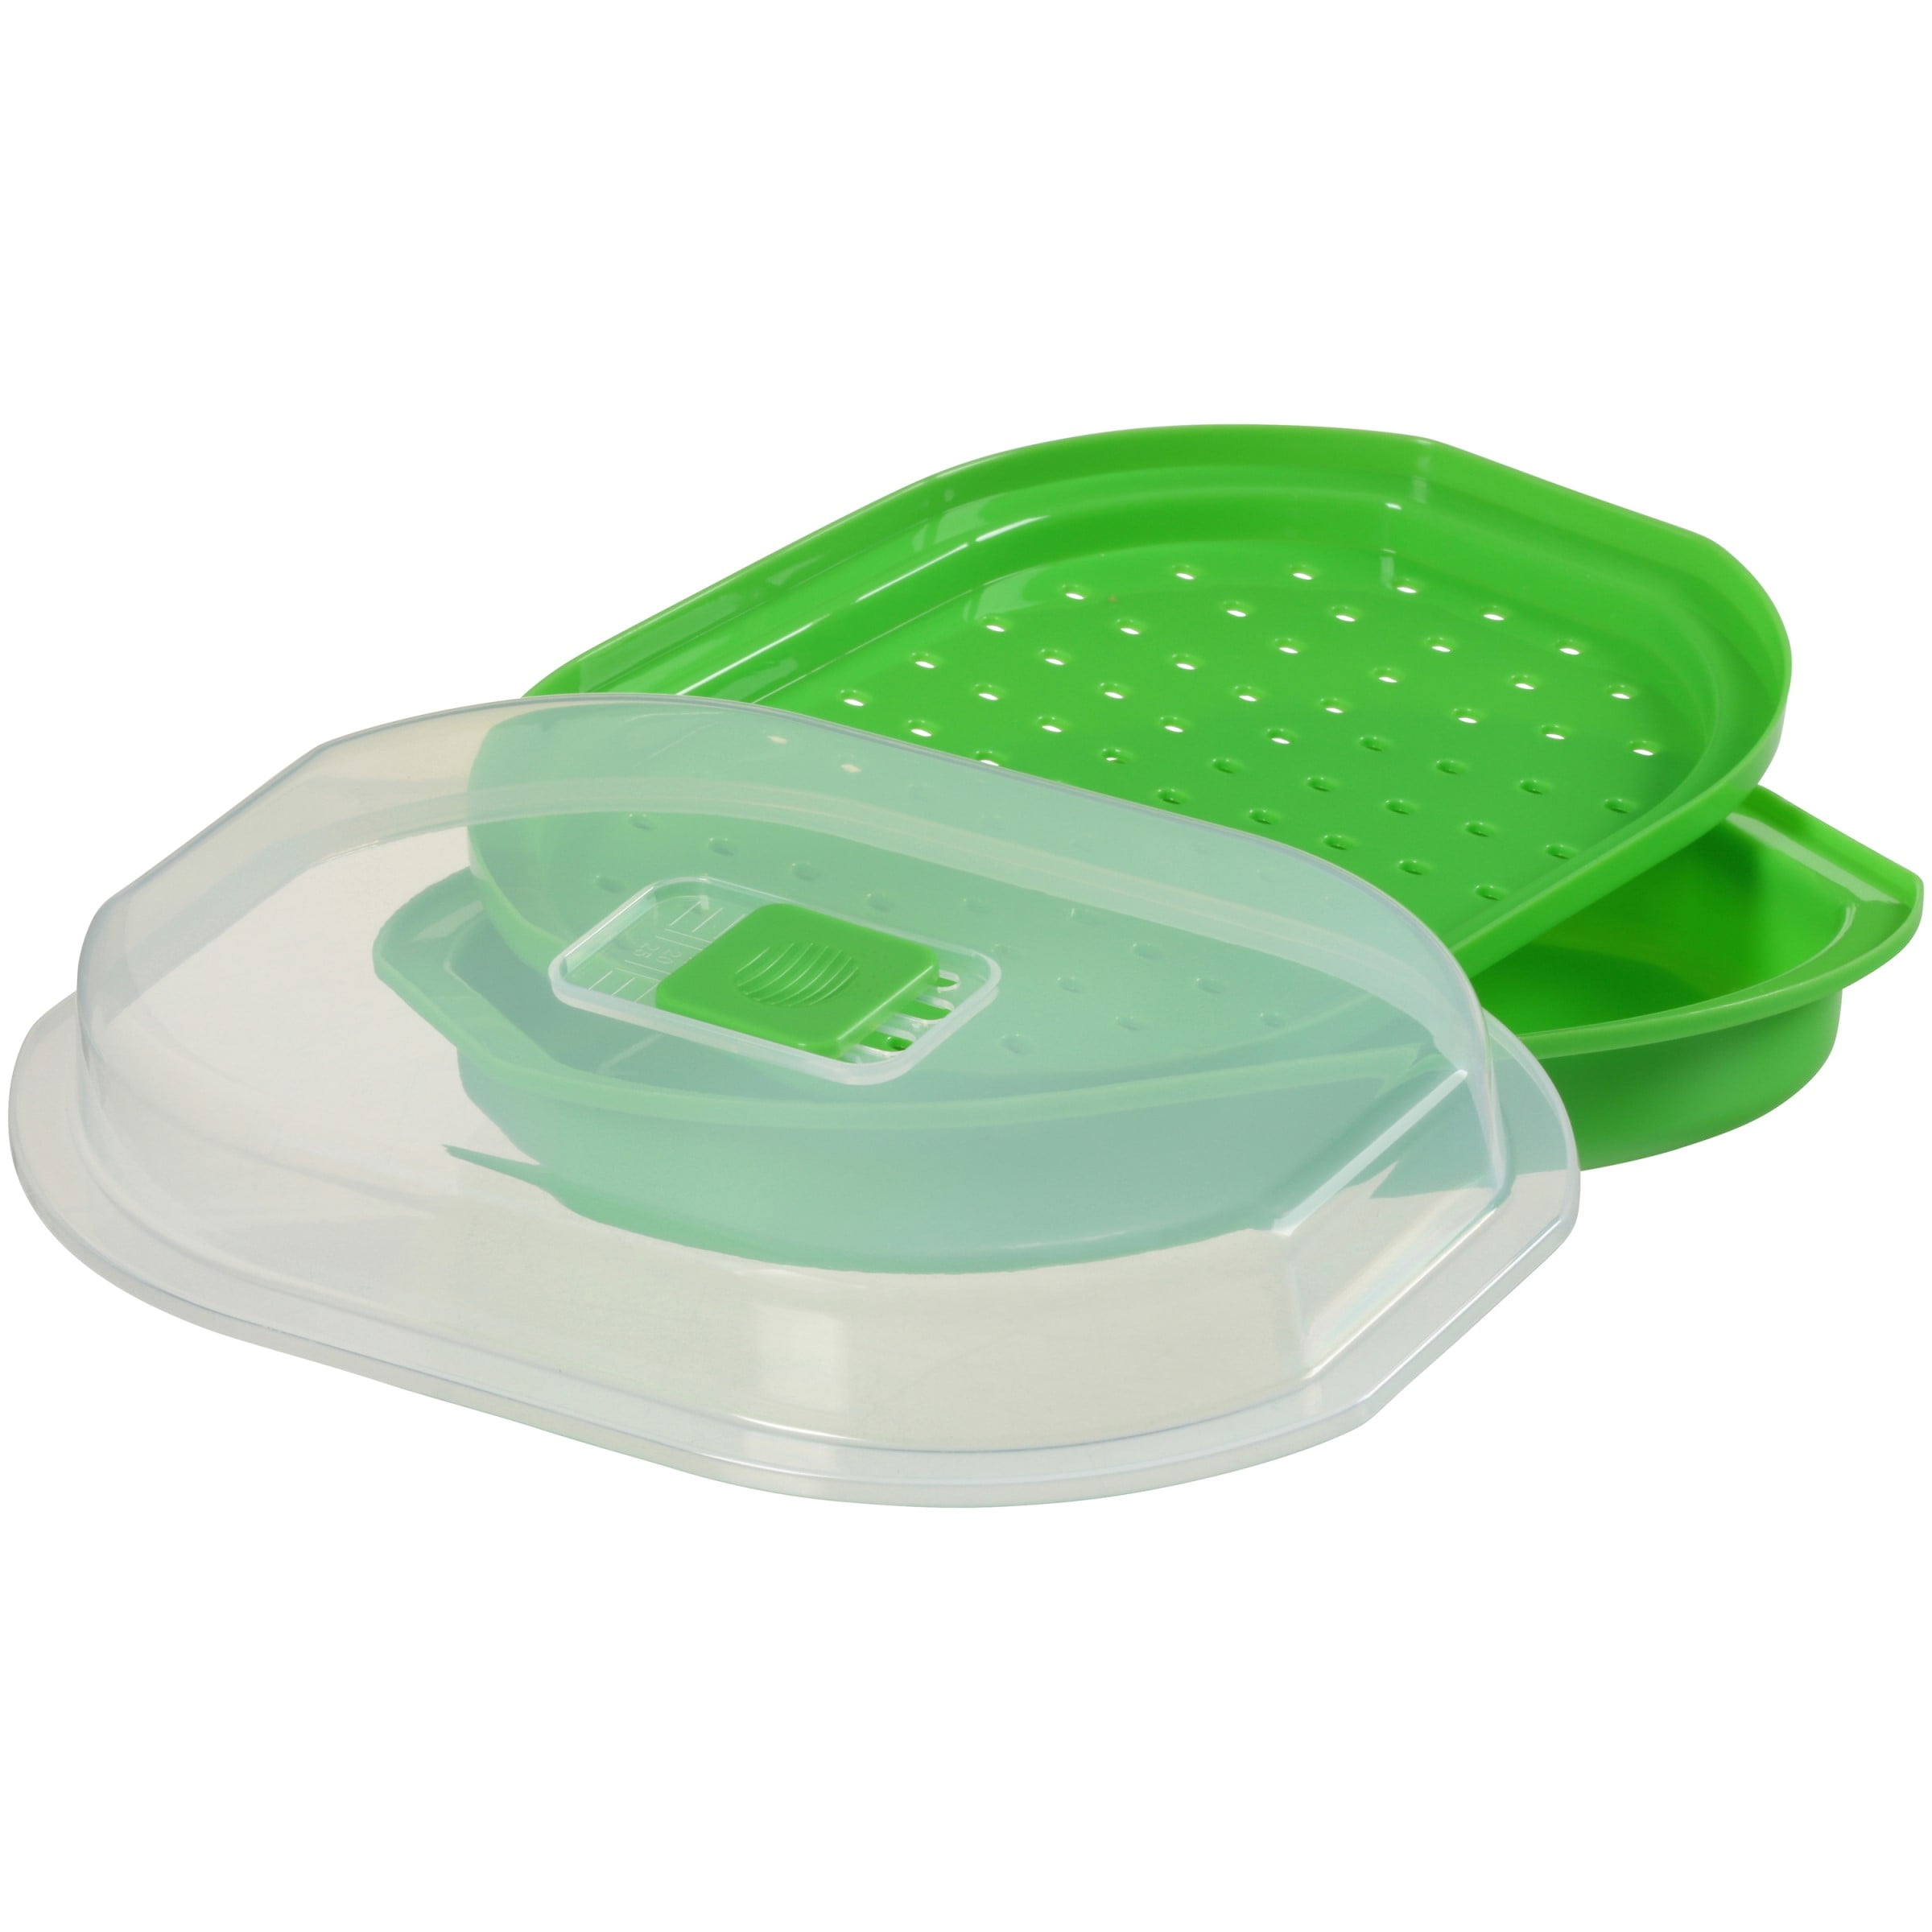 Tafura Microwave Vegetable Steamer Microwavable Steamer Basket for Veggie / Broccoli / Fish 2 Liter Steam Container w/ Vented Lid BPA Free 